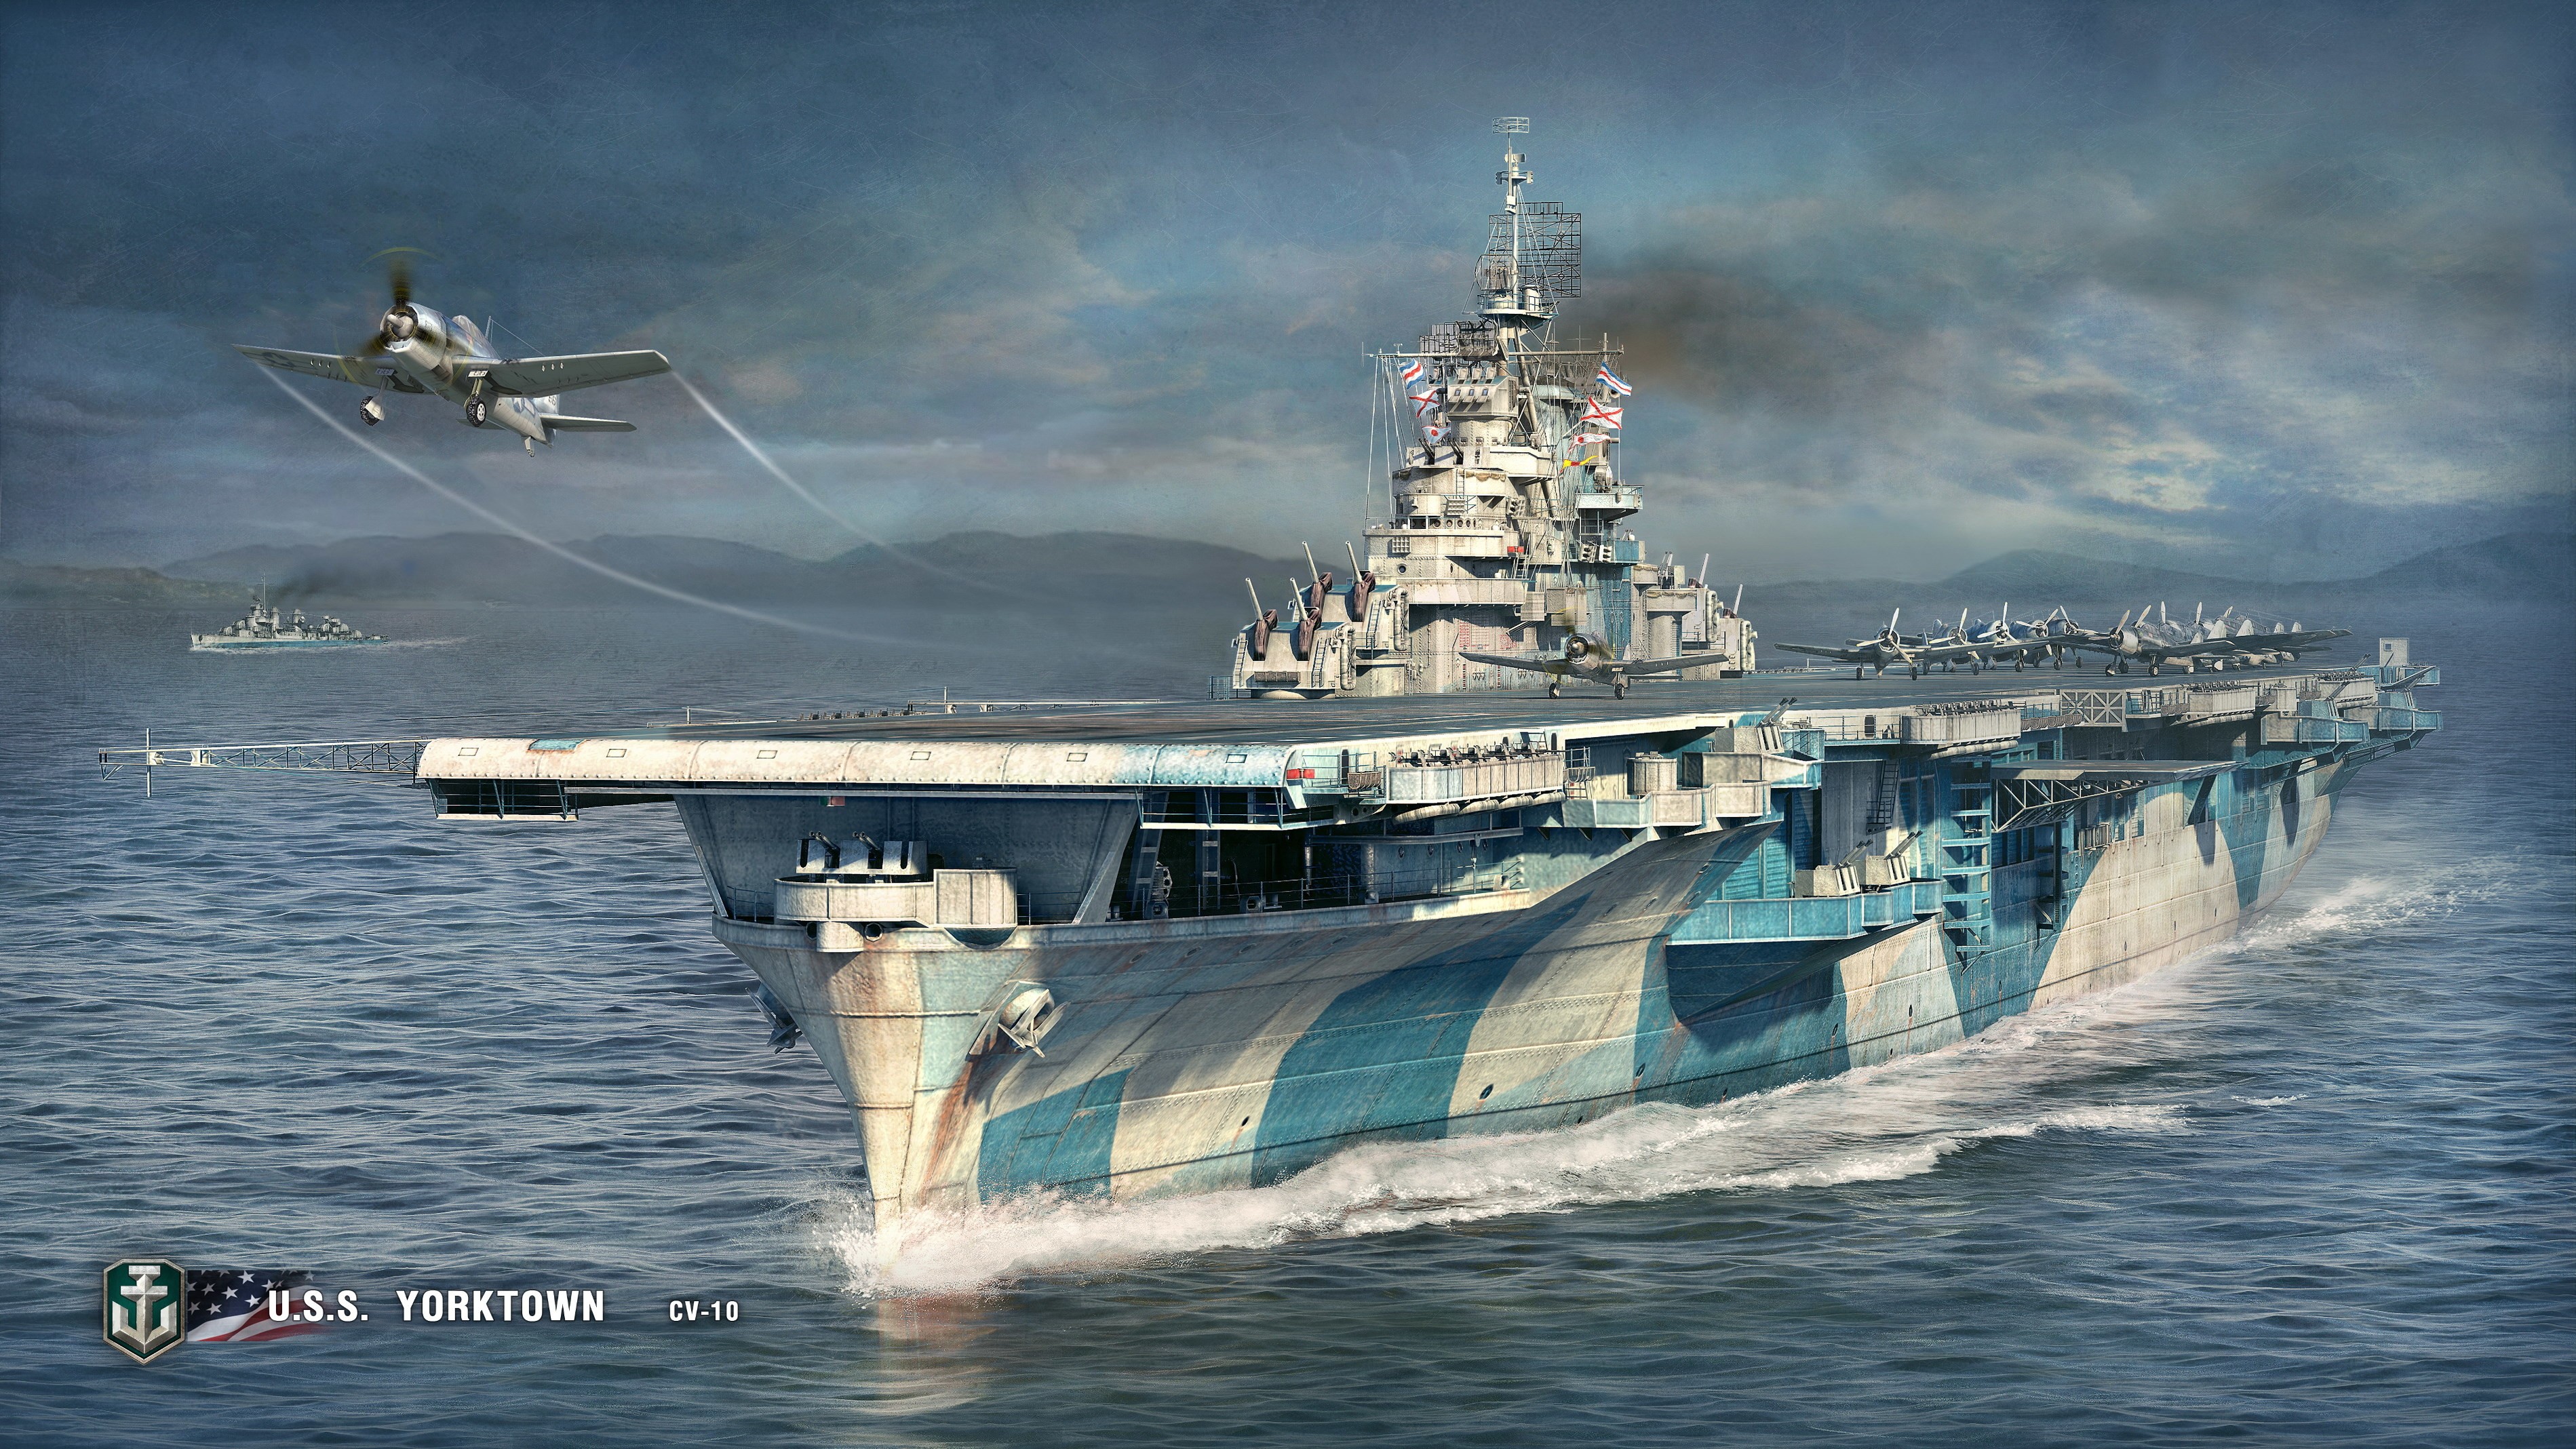 General 3798x2137 artwork video games aircraft carrier military military aircraft military vehicle vehicle ship warship